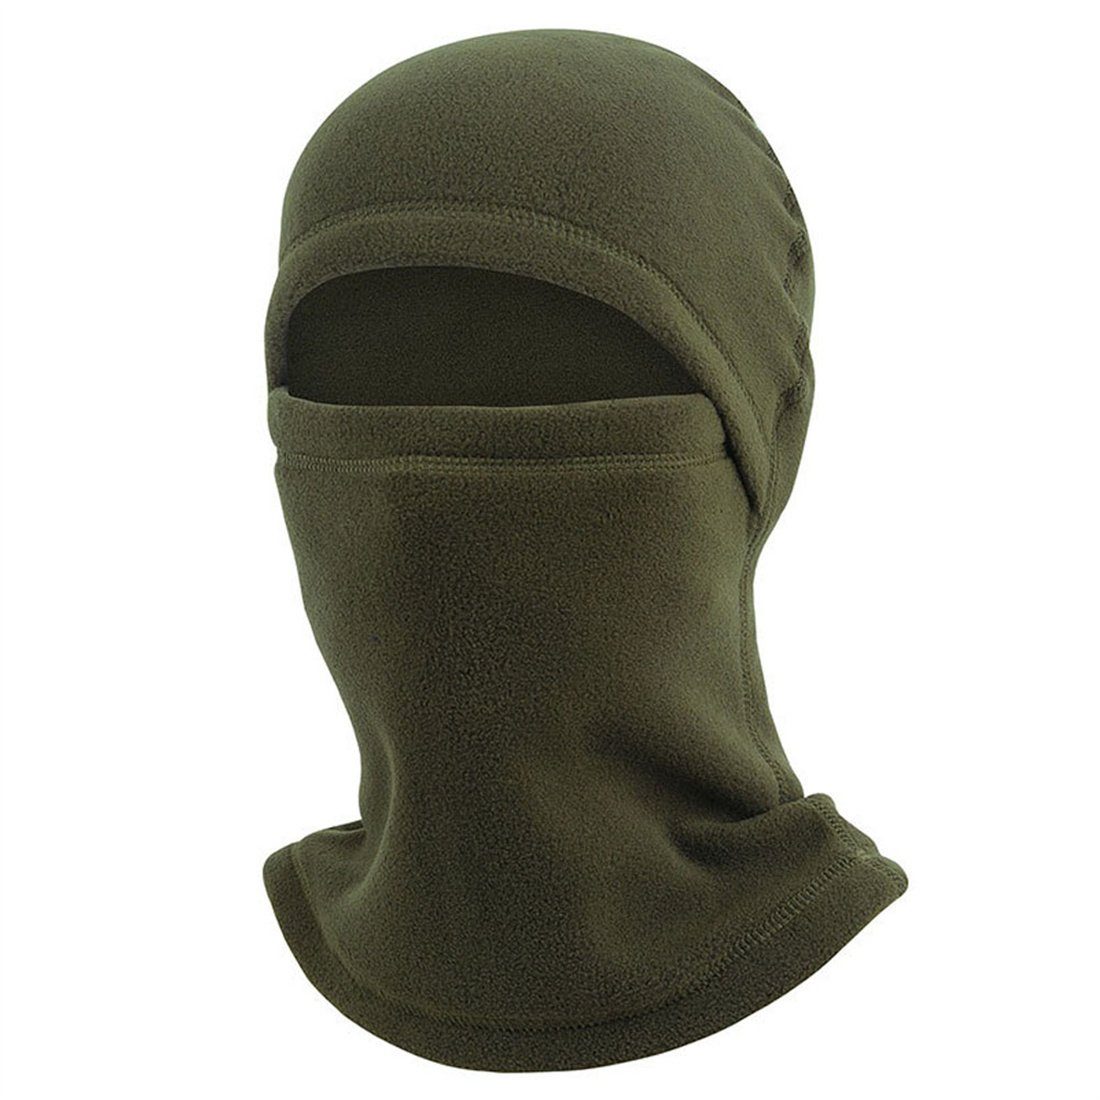 DÖRÖY Sturmhaube Winter Reiten Warme Maske,Multifunktionale Coldproof Ski Kopfbedeckung grün